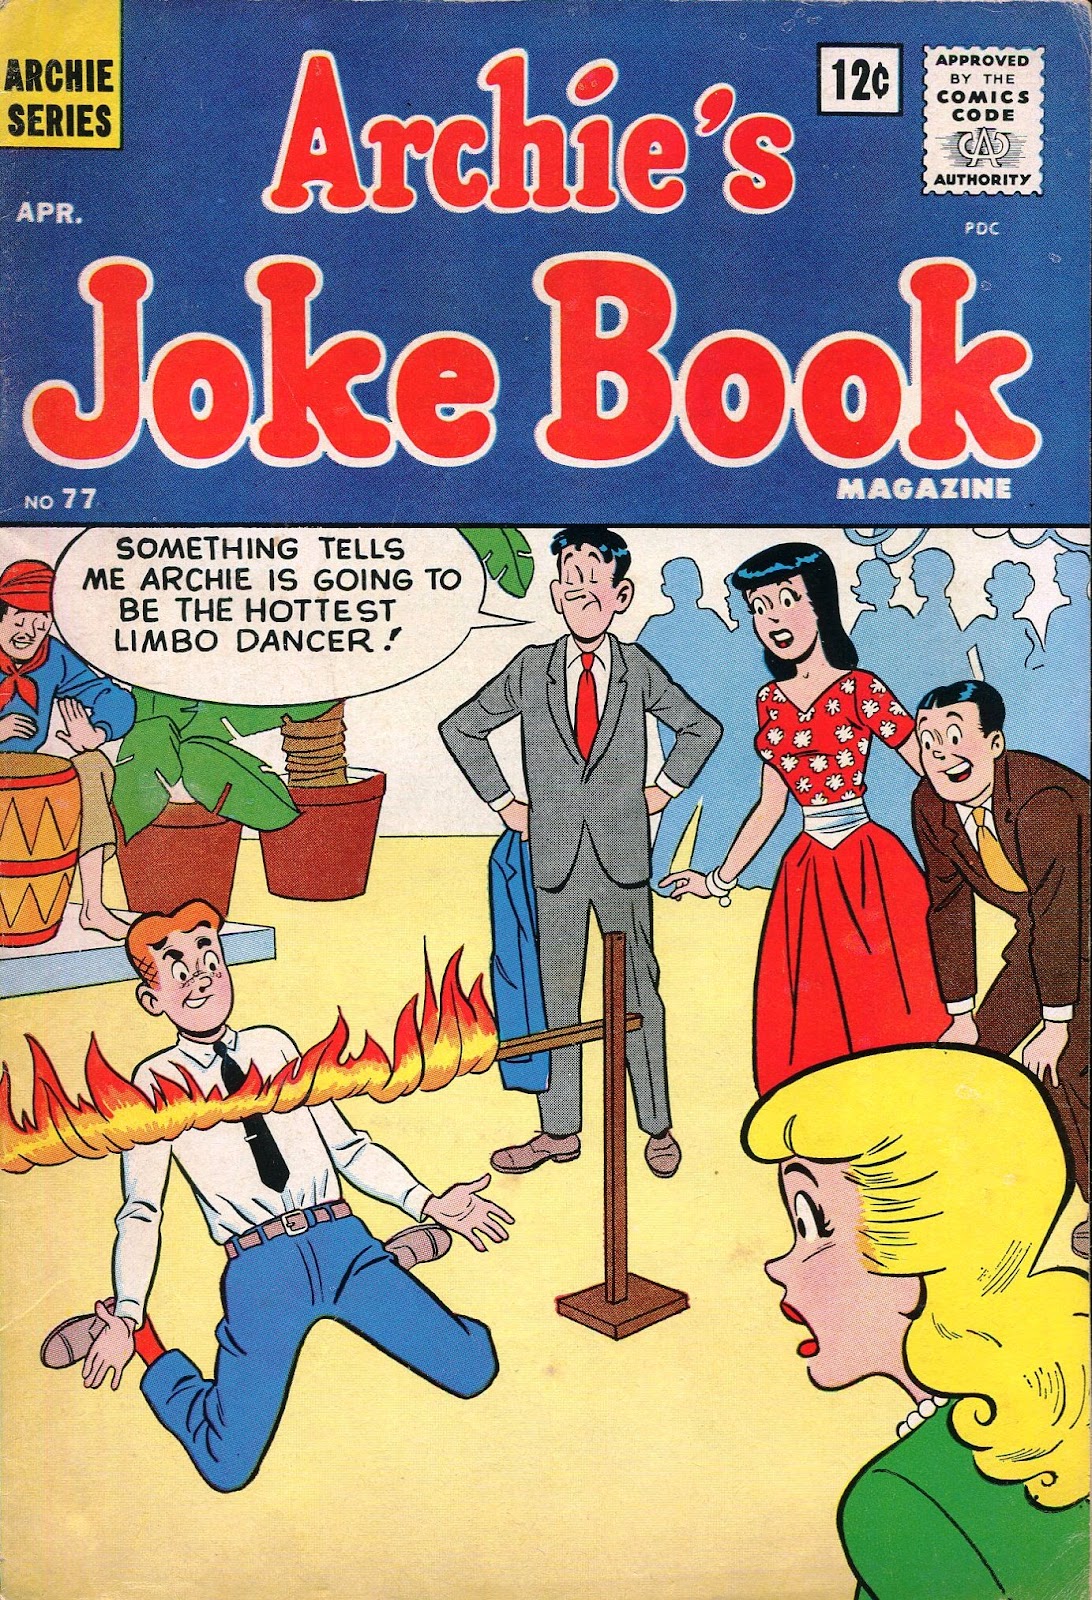 Archie's Joke Book Magazine issue 77 - Page 1